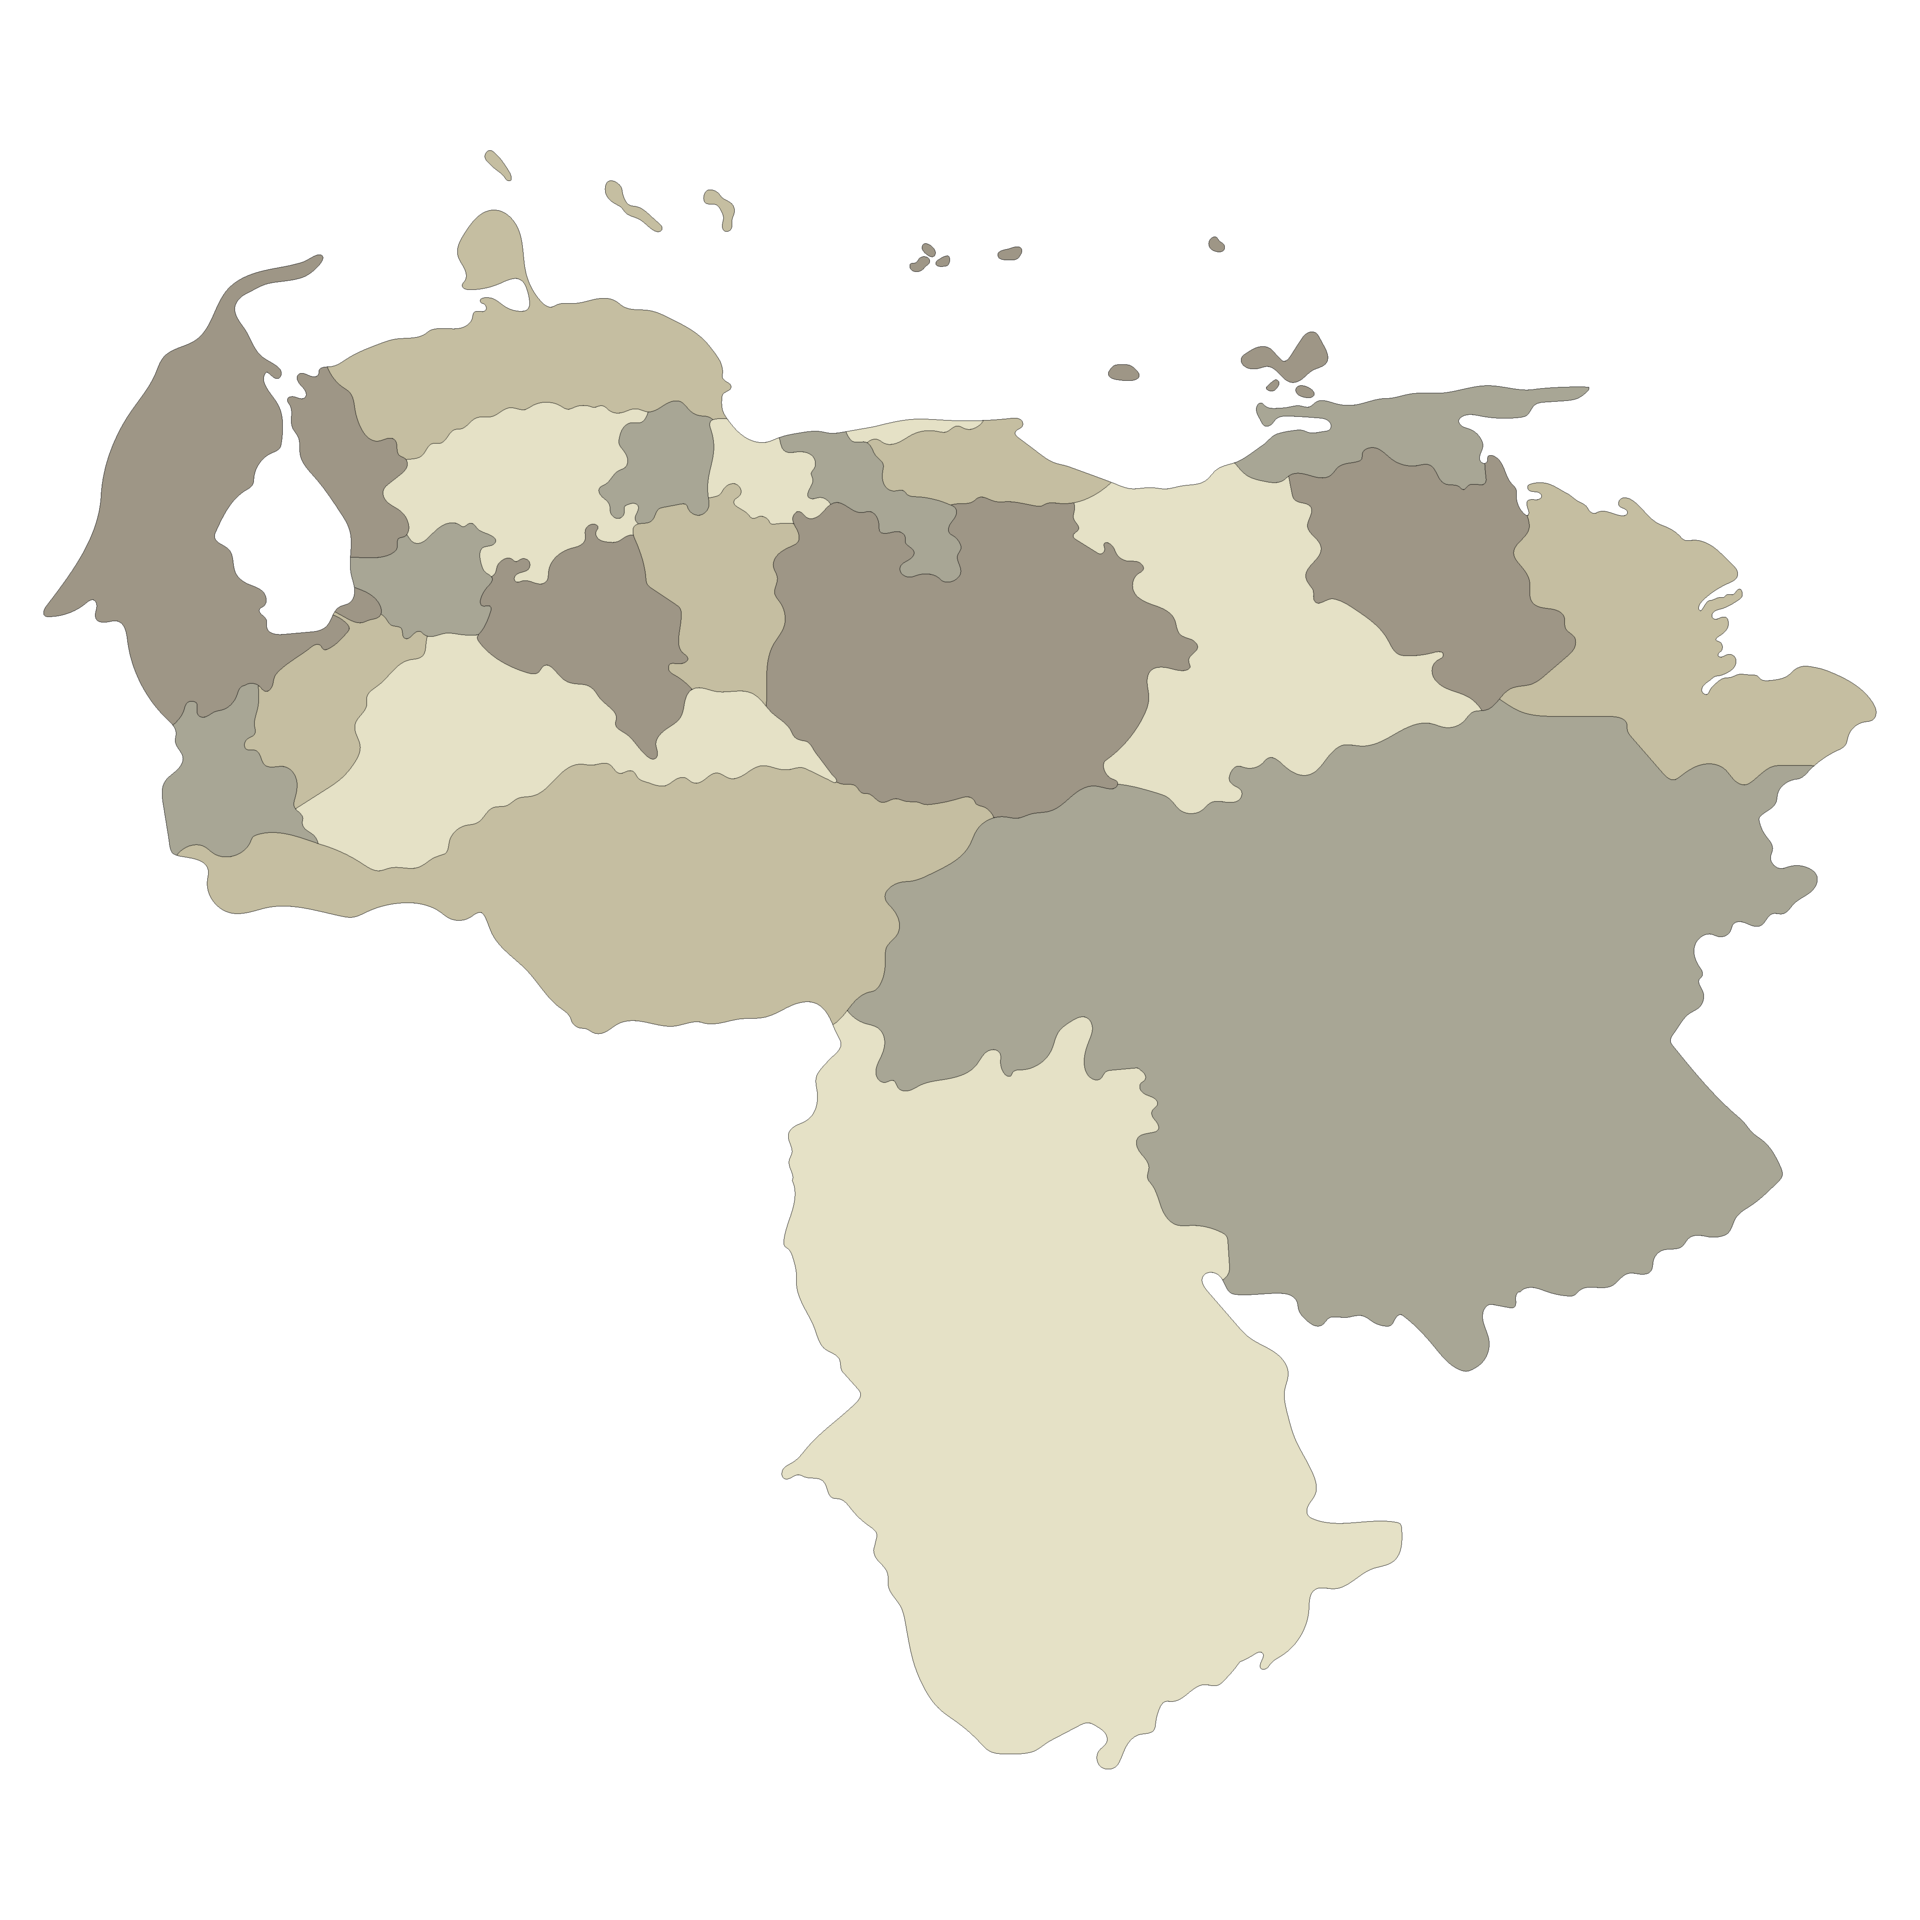 Venezuela Map Map Of Venezuela In Administrative Provinces In